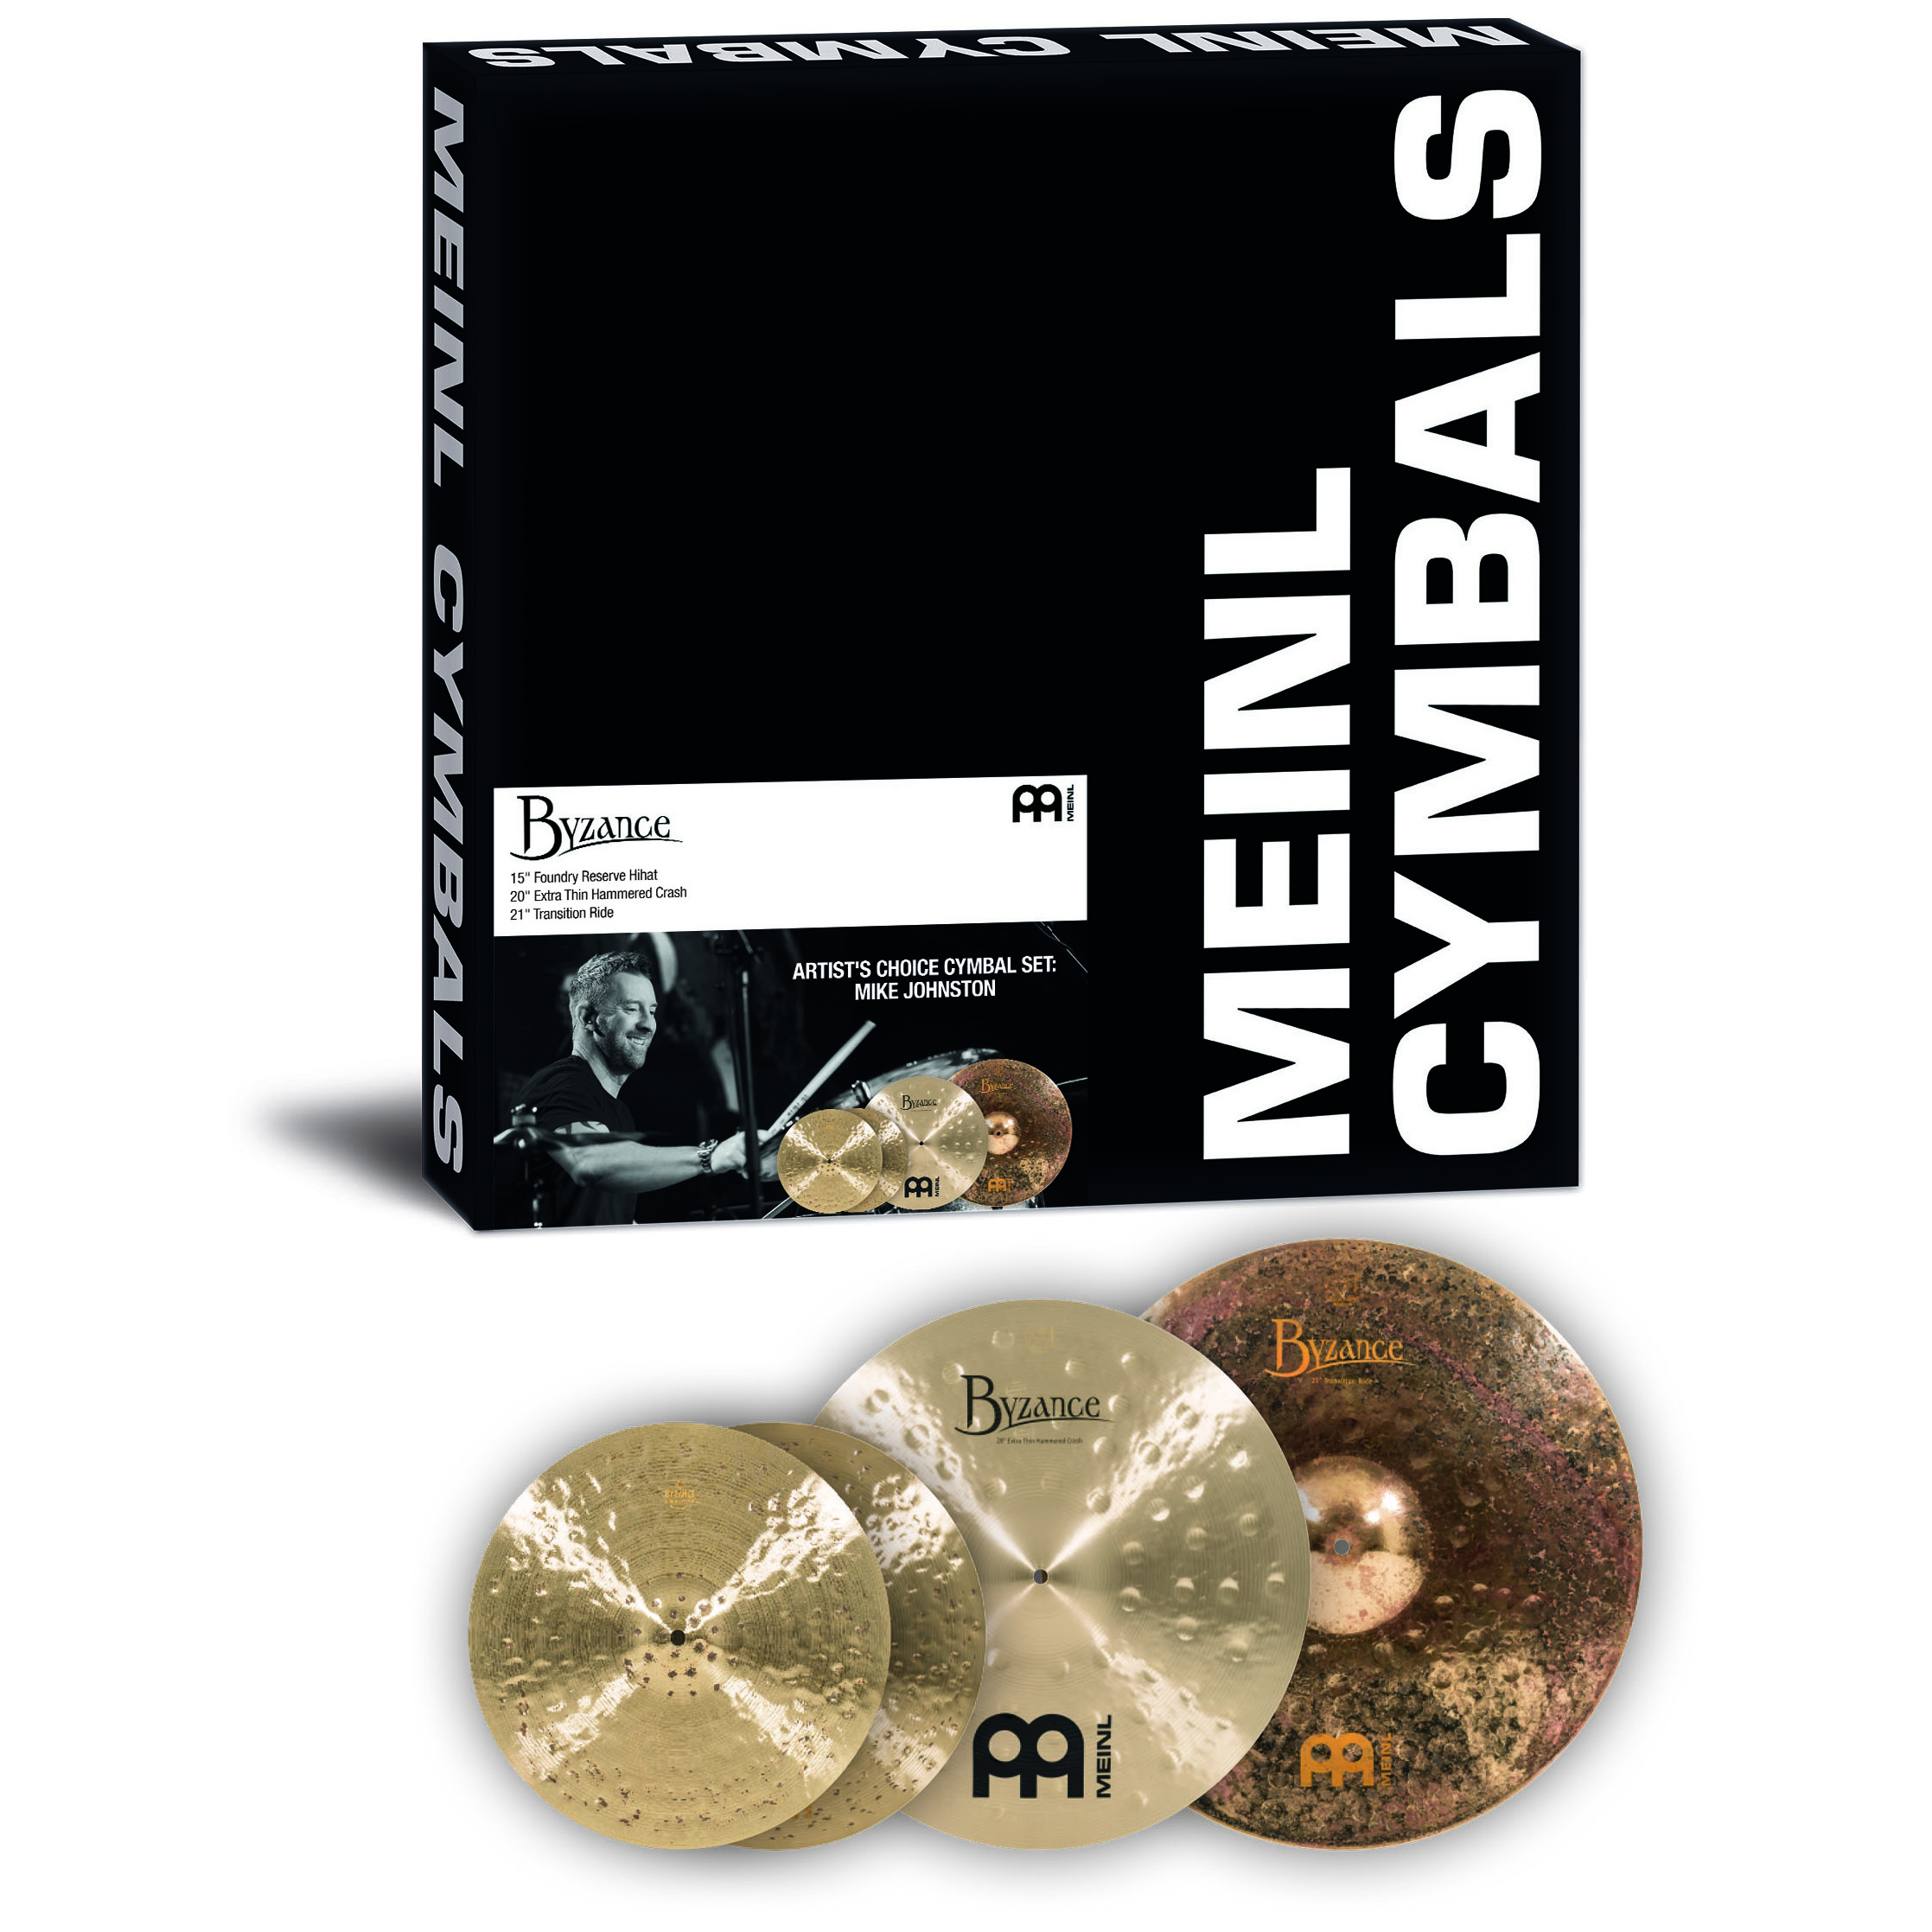 Meinl Cymbals A-CS6 - Byzance Artist's Choice Cymbal Set: Mike Johnston